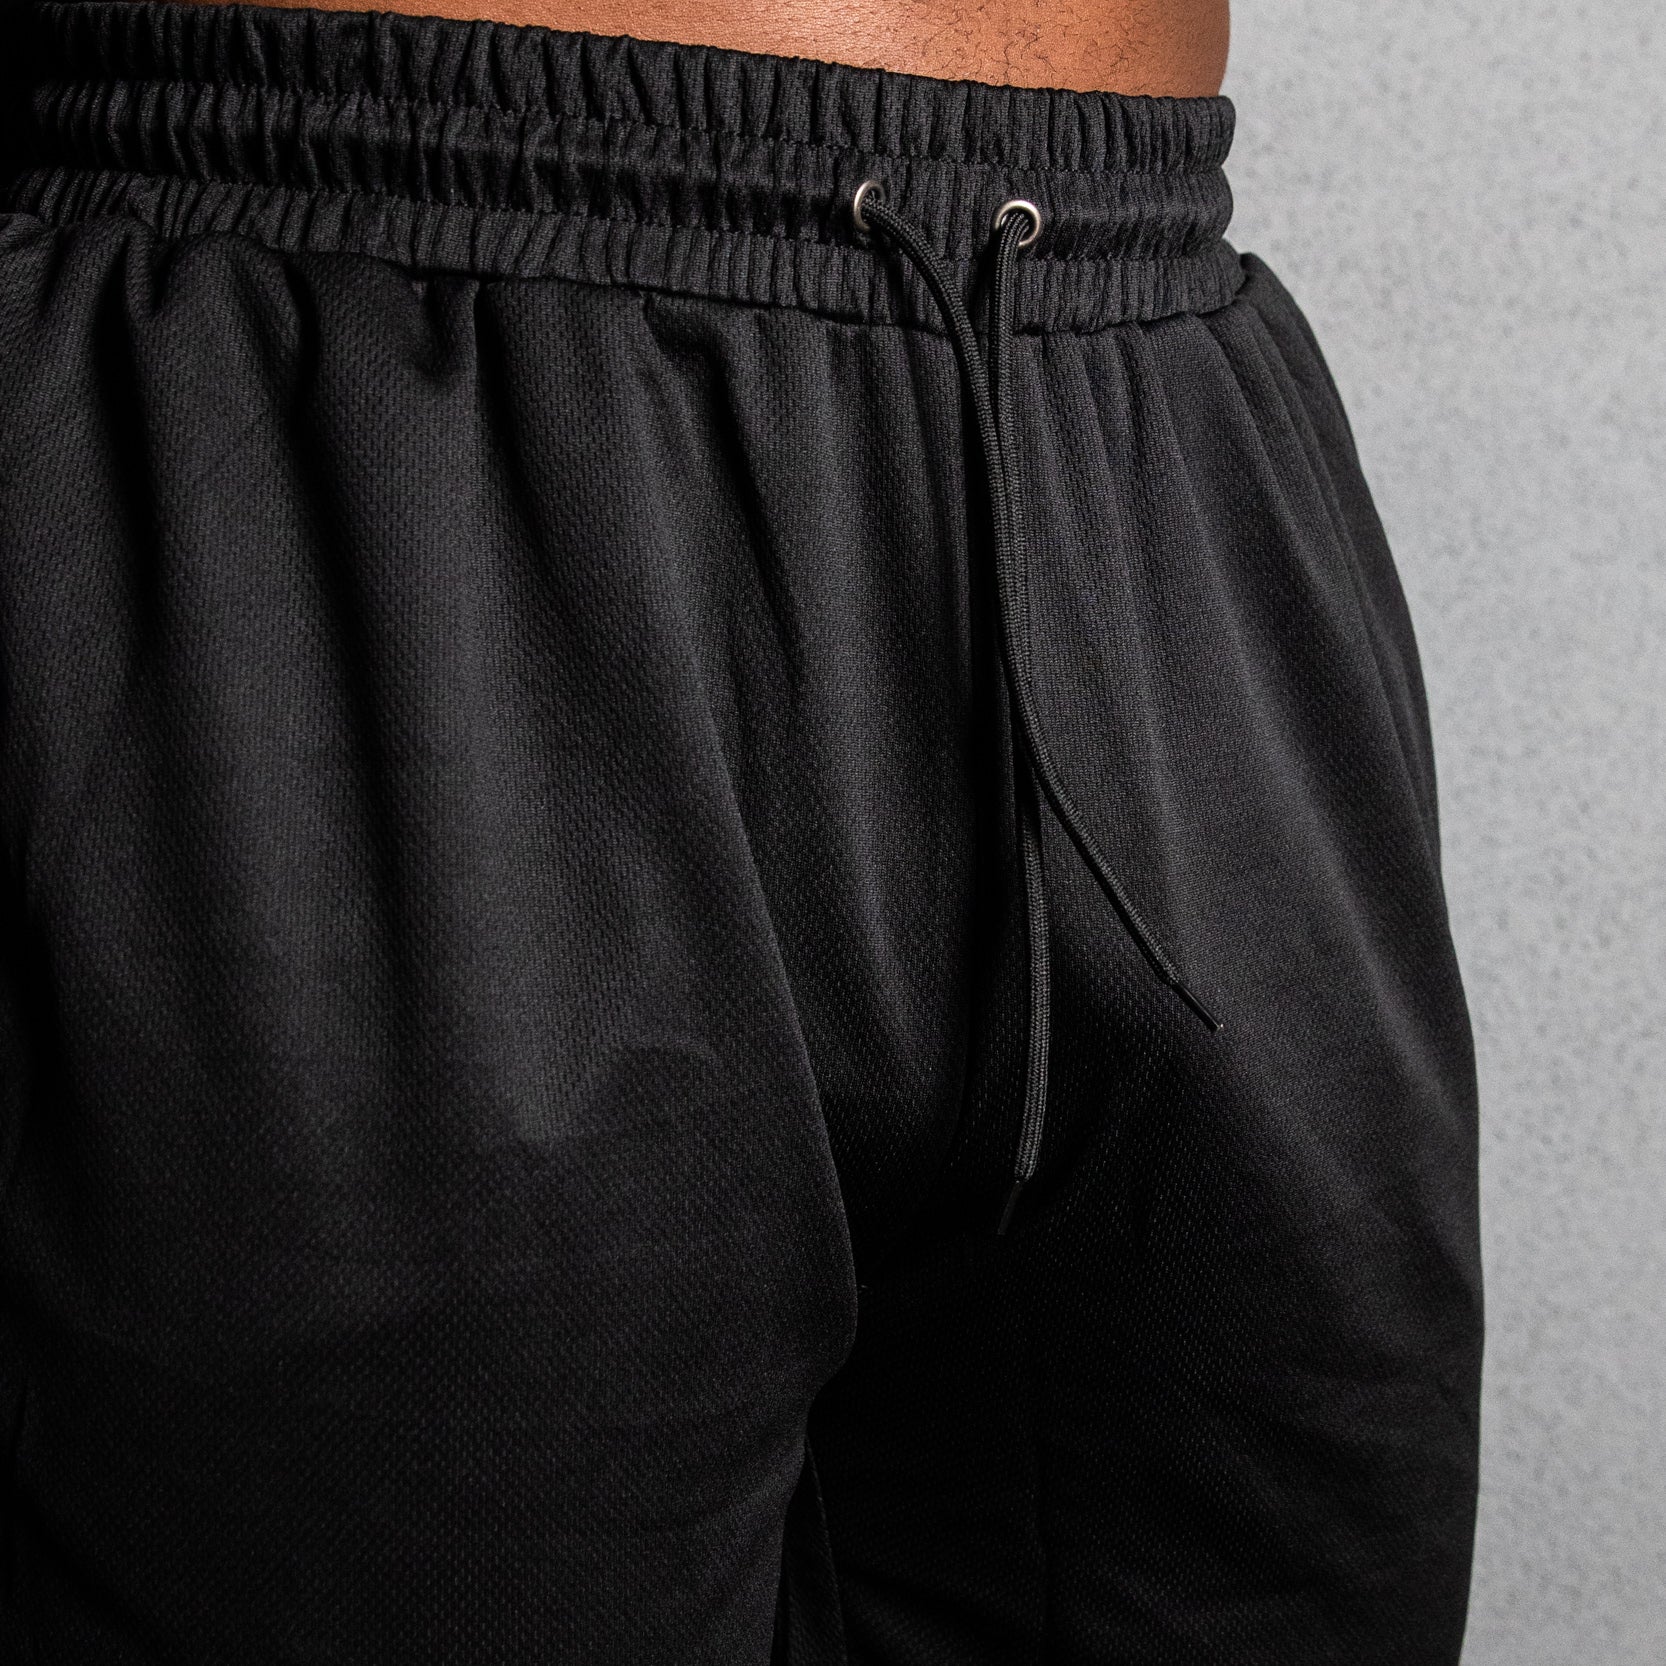 Black Watermark Gym Shorts